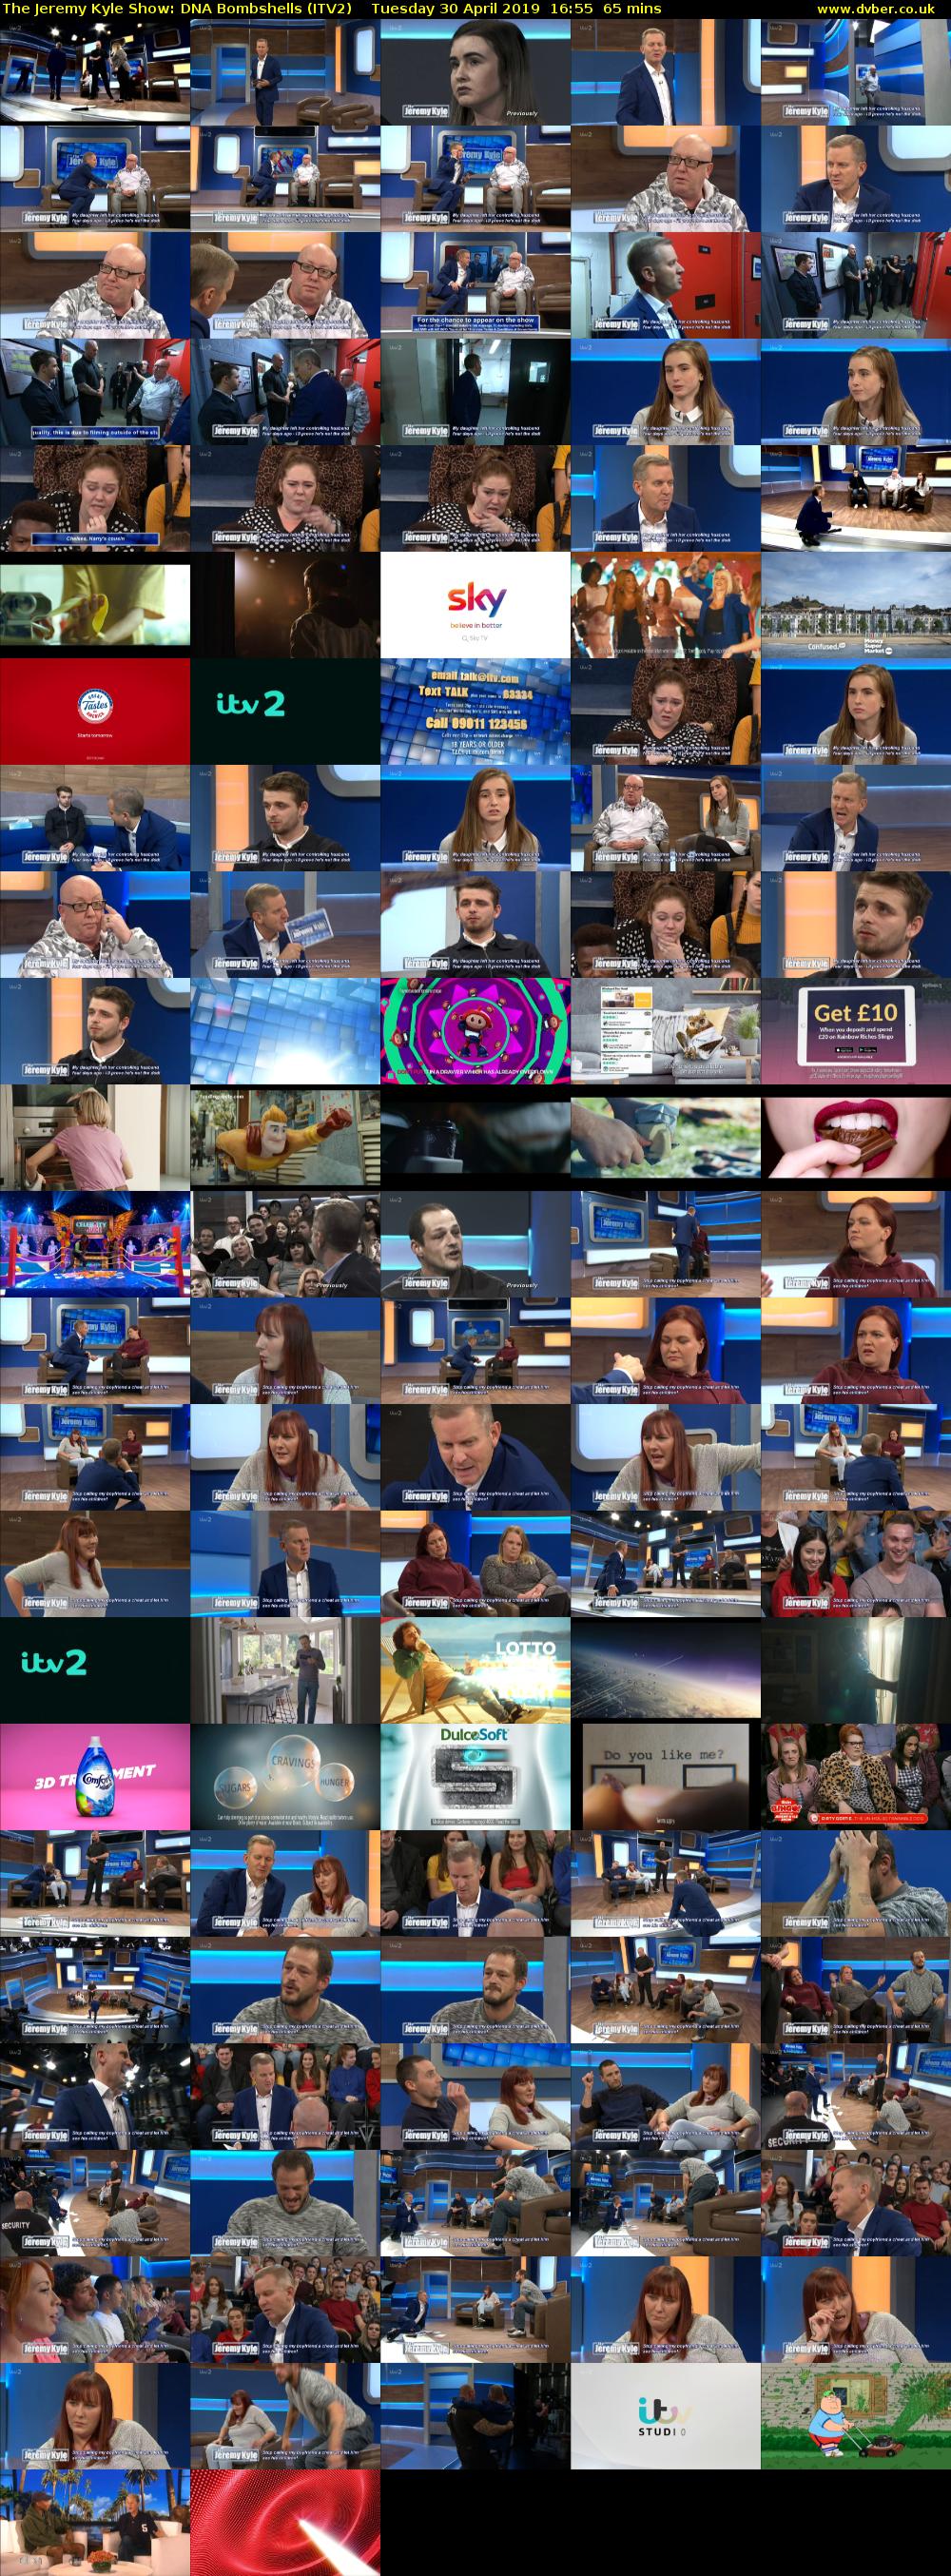 The Jeremy Kyle Show: DNA Bombshells (ITV2) Tuesday 30 April 2019 16:55 - 18:00